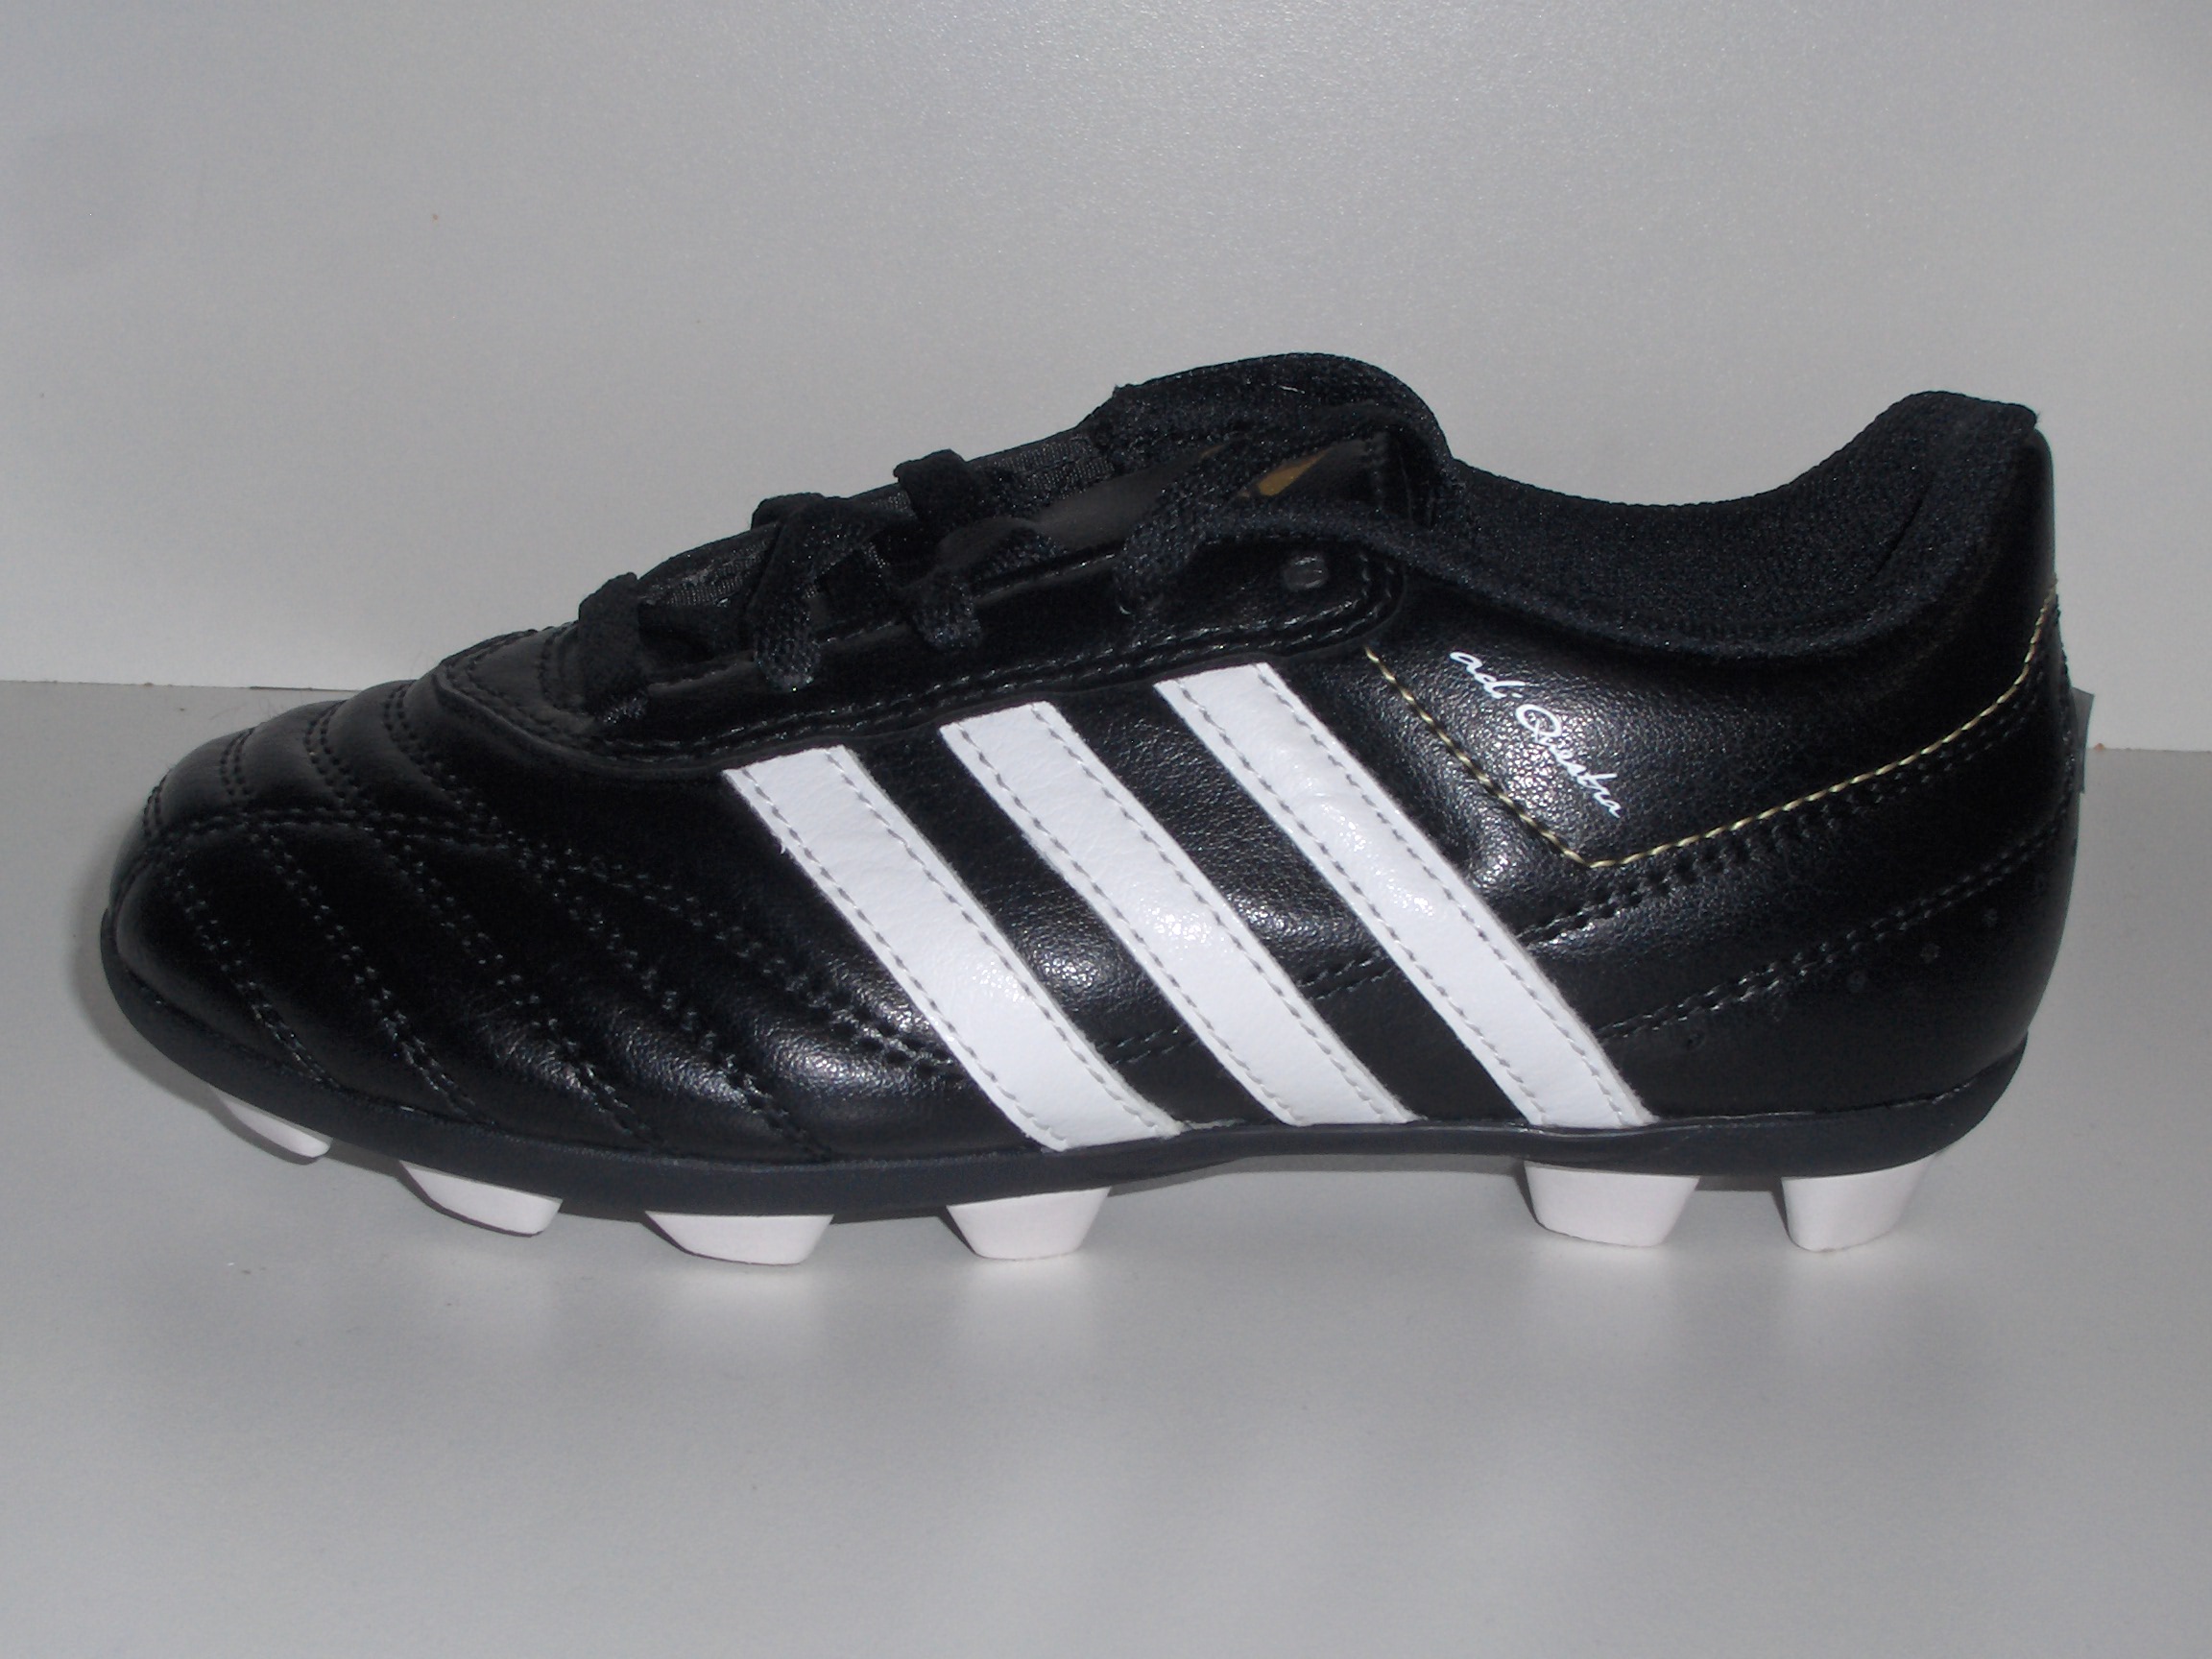 2010 Adidas Kids Soccer shoes Reg $50 